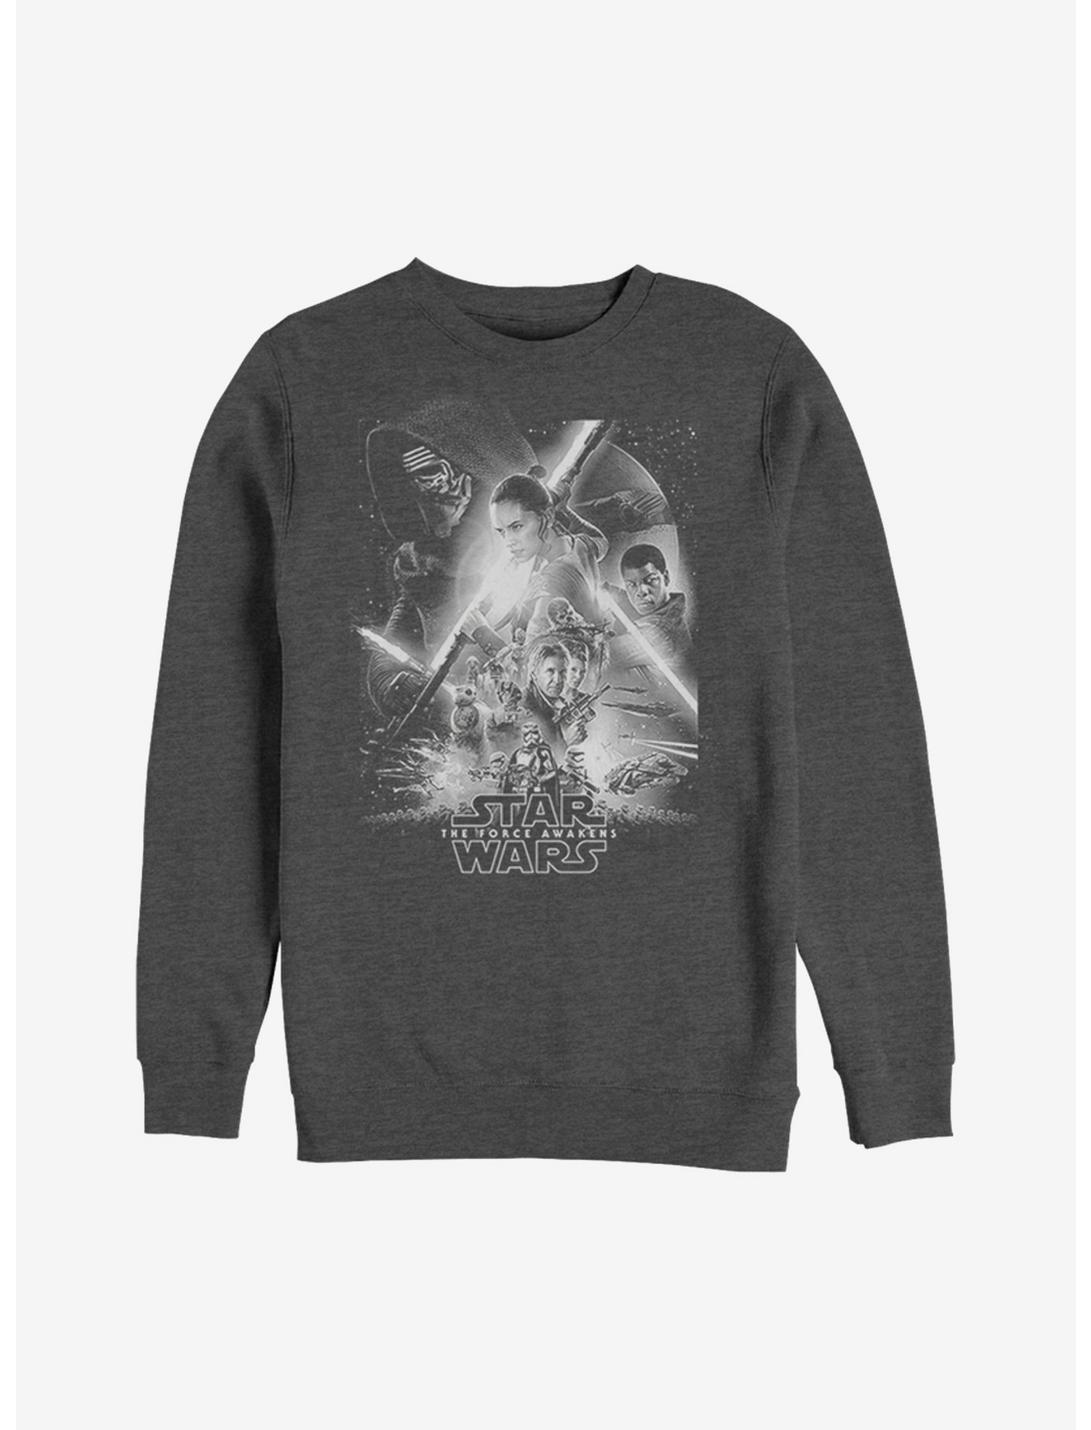 Star Wars Episode VII The Force Awakens Grey-Scale Poster Sweatshirt, CHAR HTR, hi-res